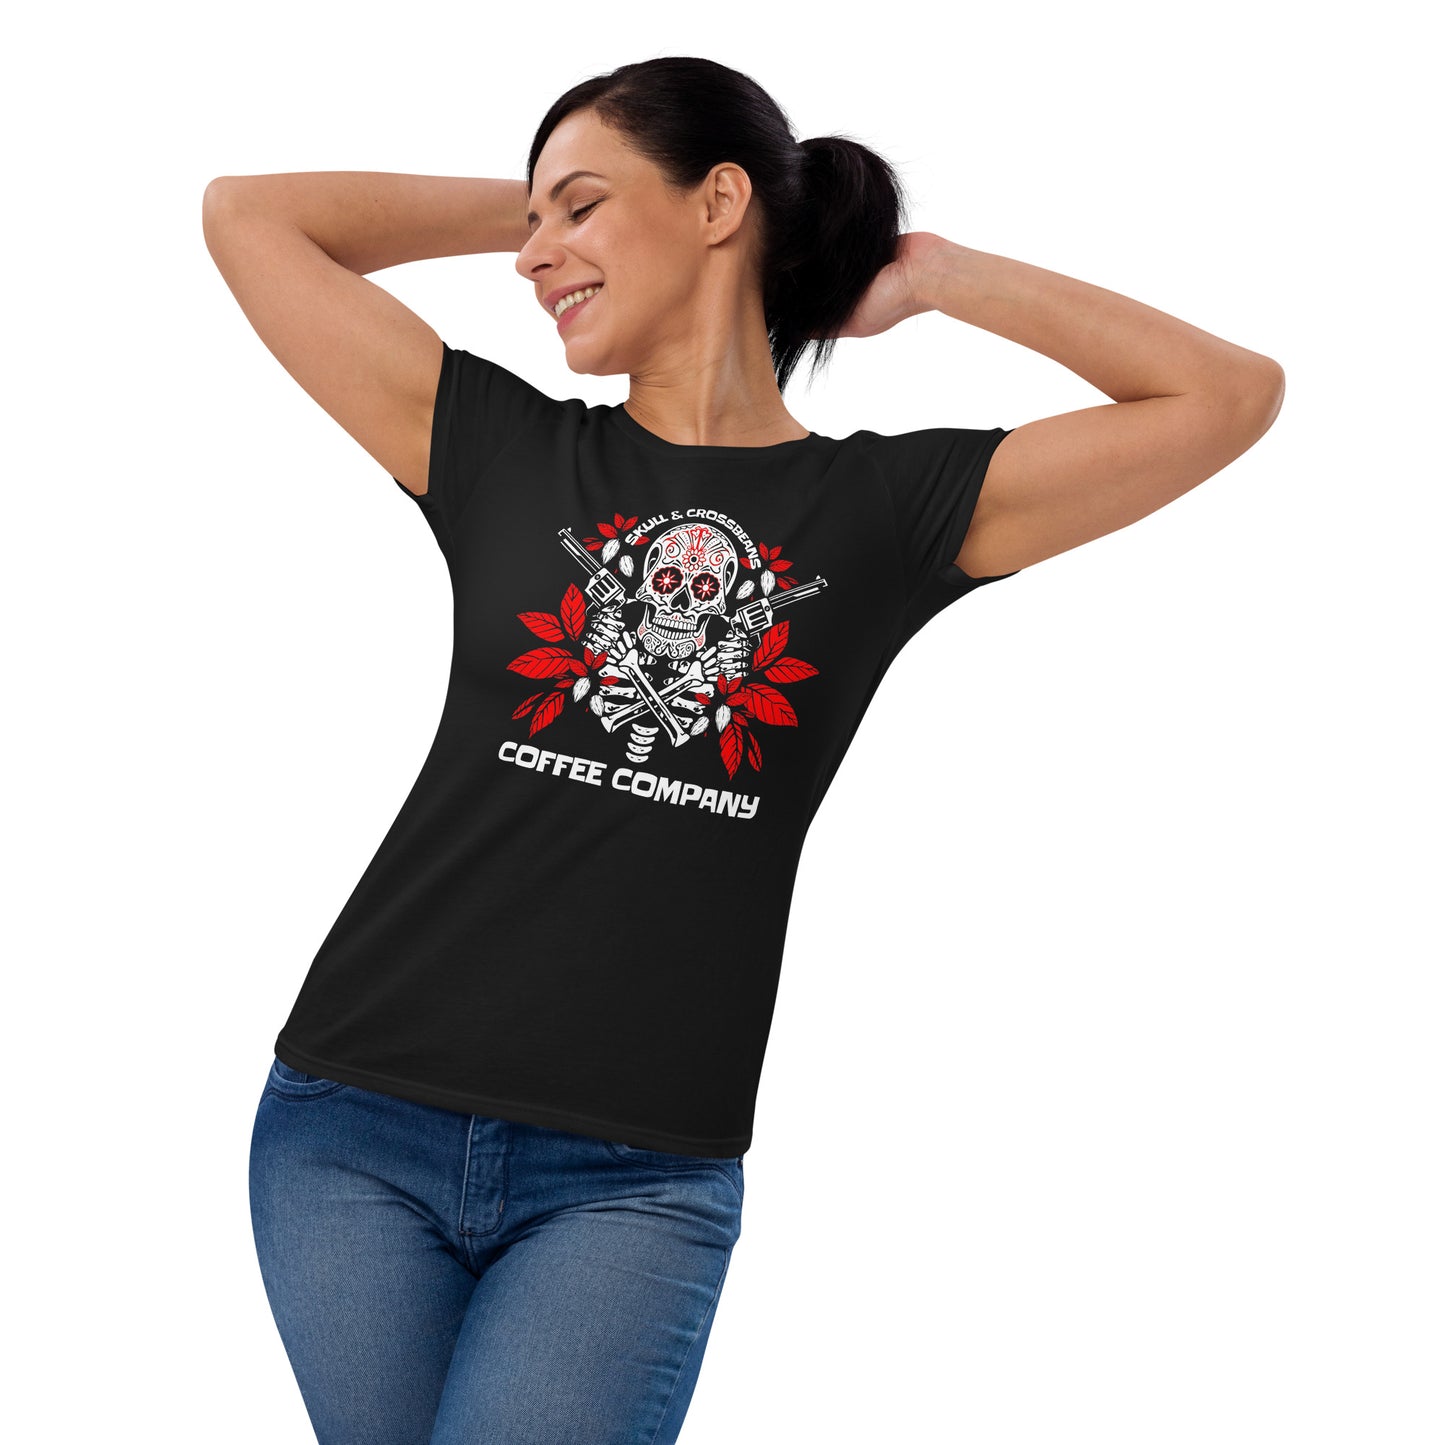 Skull and CrossBeans Coffee - Women's Short Sleeve T-shirt